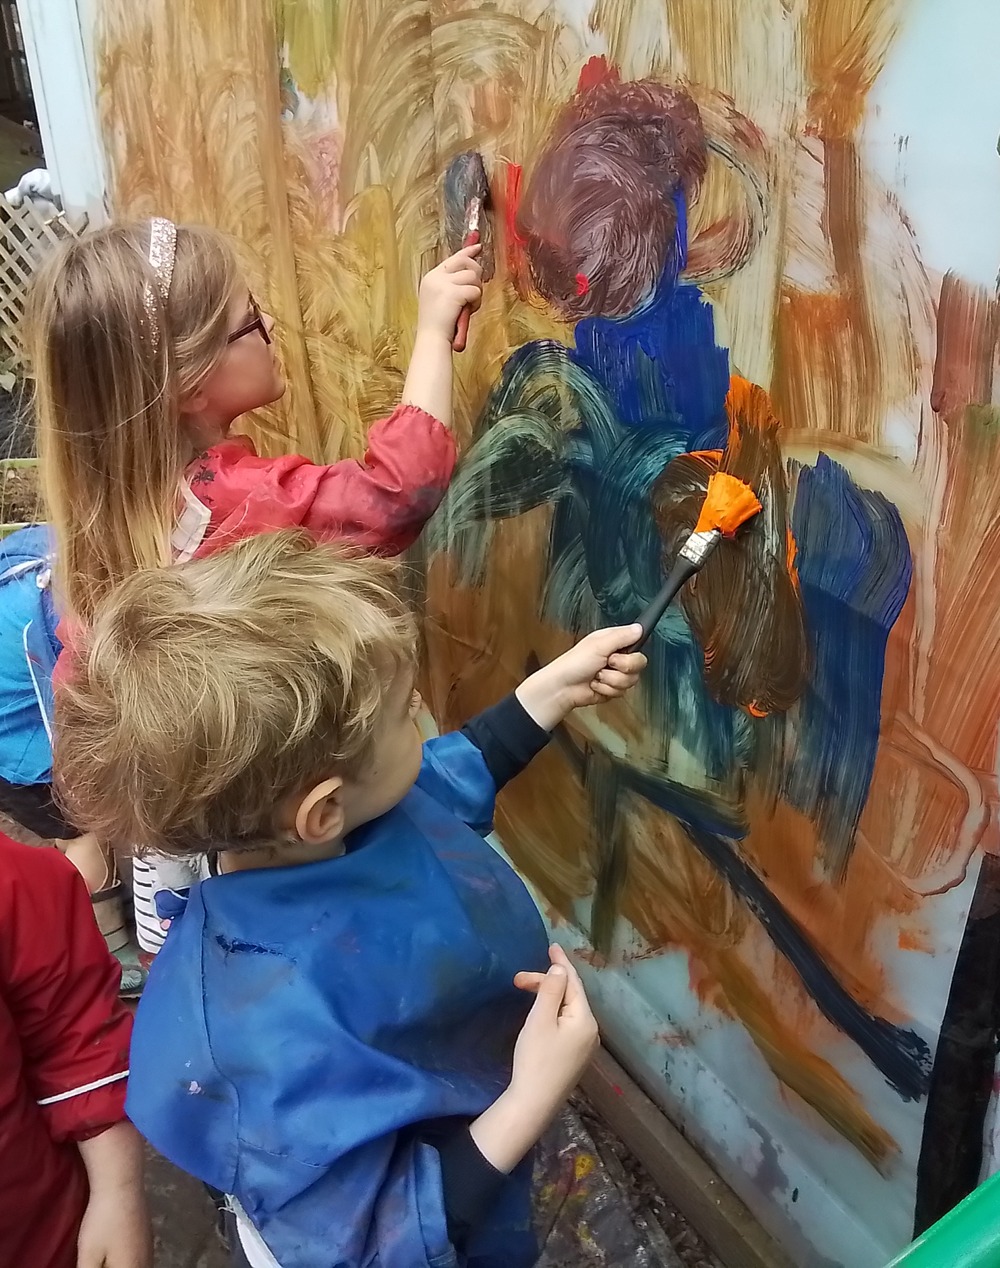 We are having fun exploring paint!